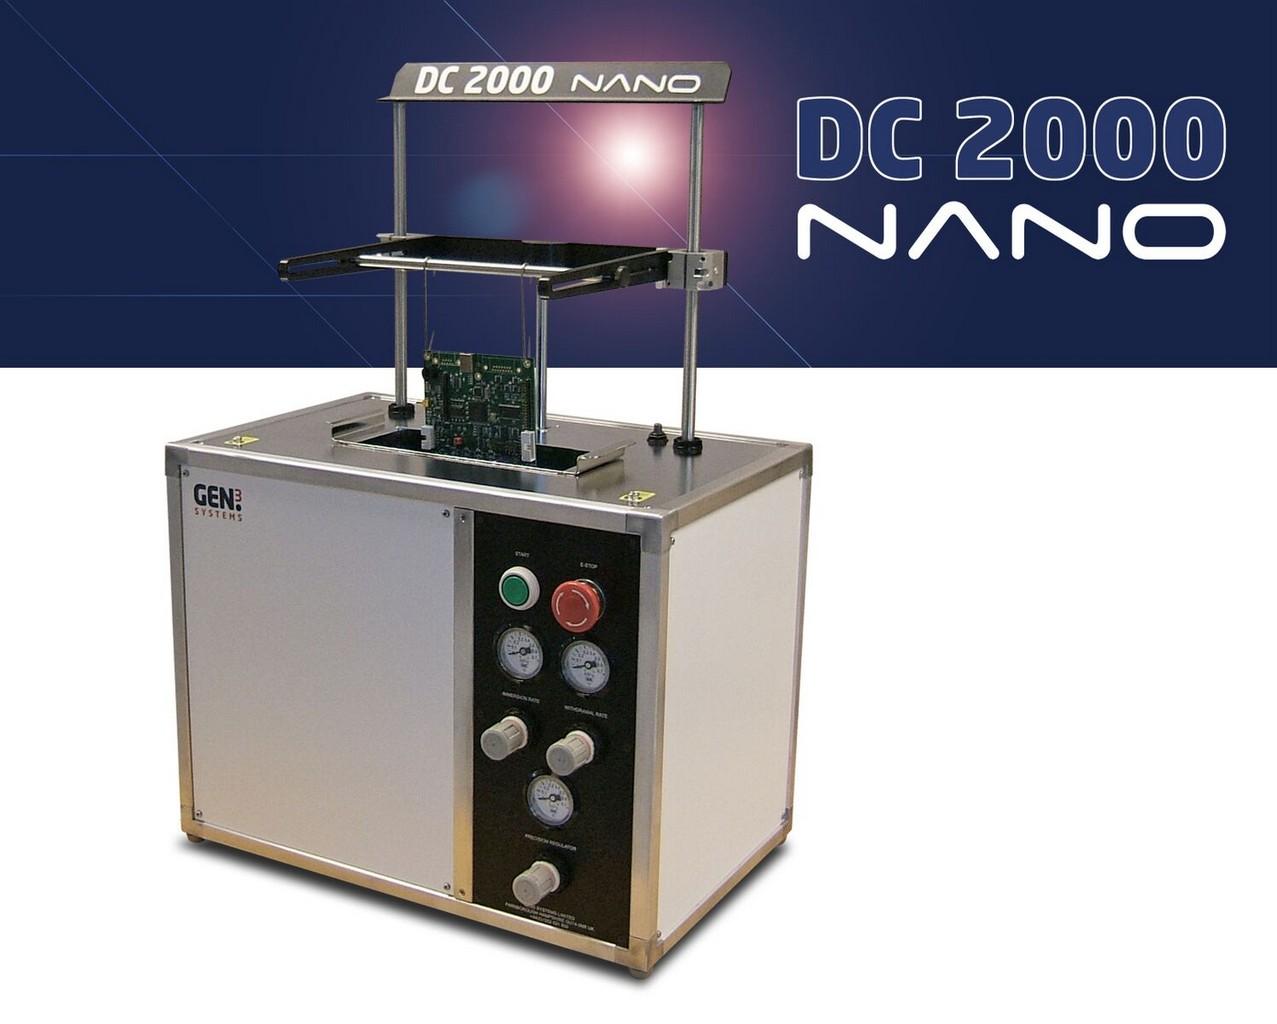 DC 2000 NANO